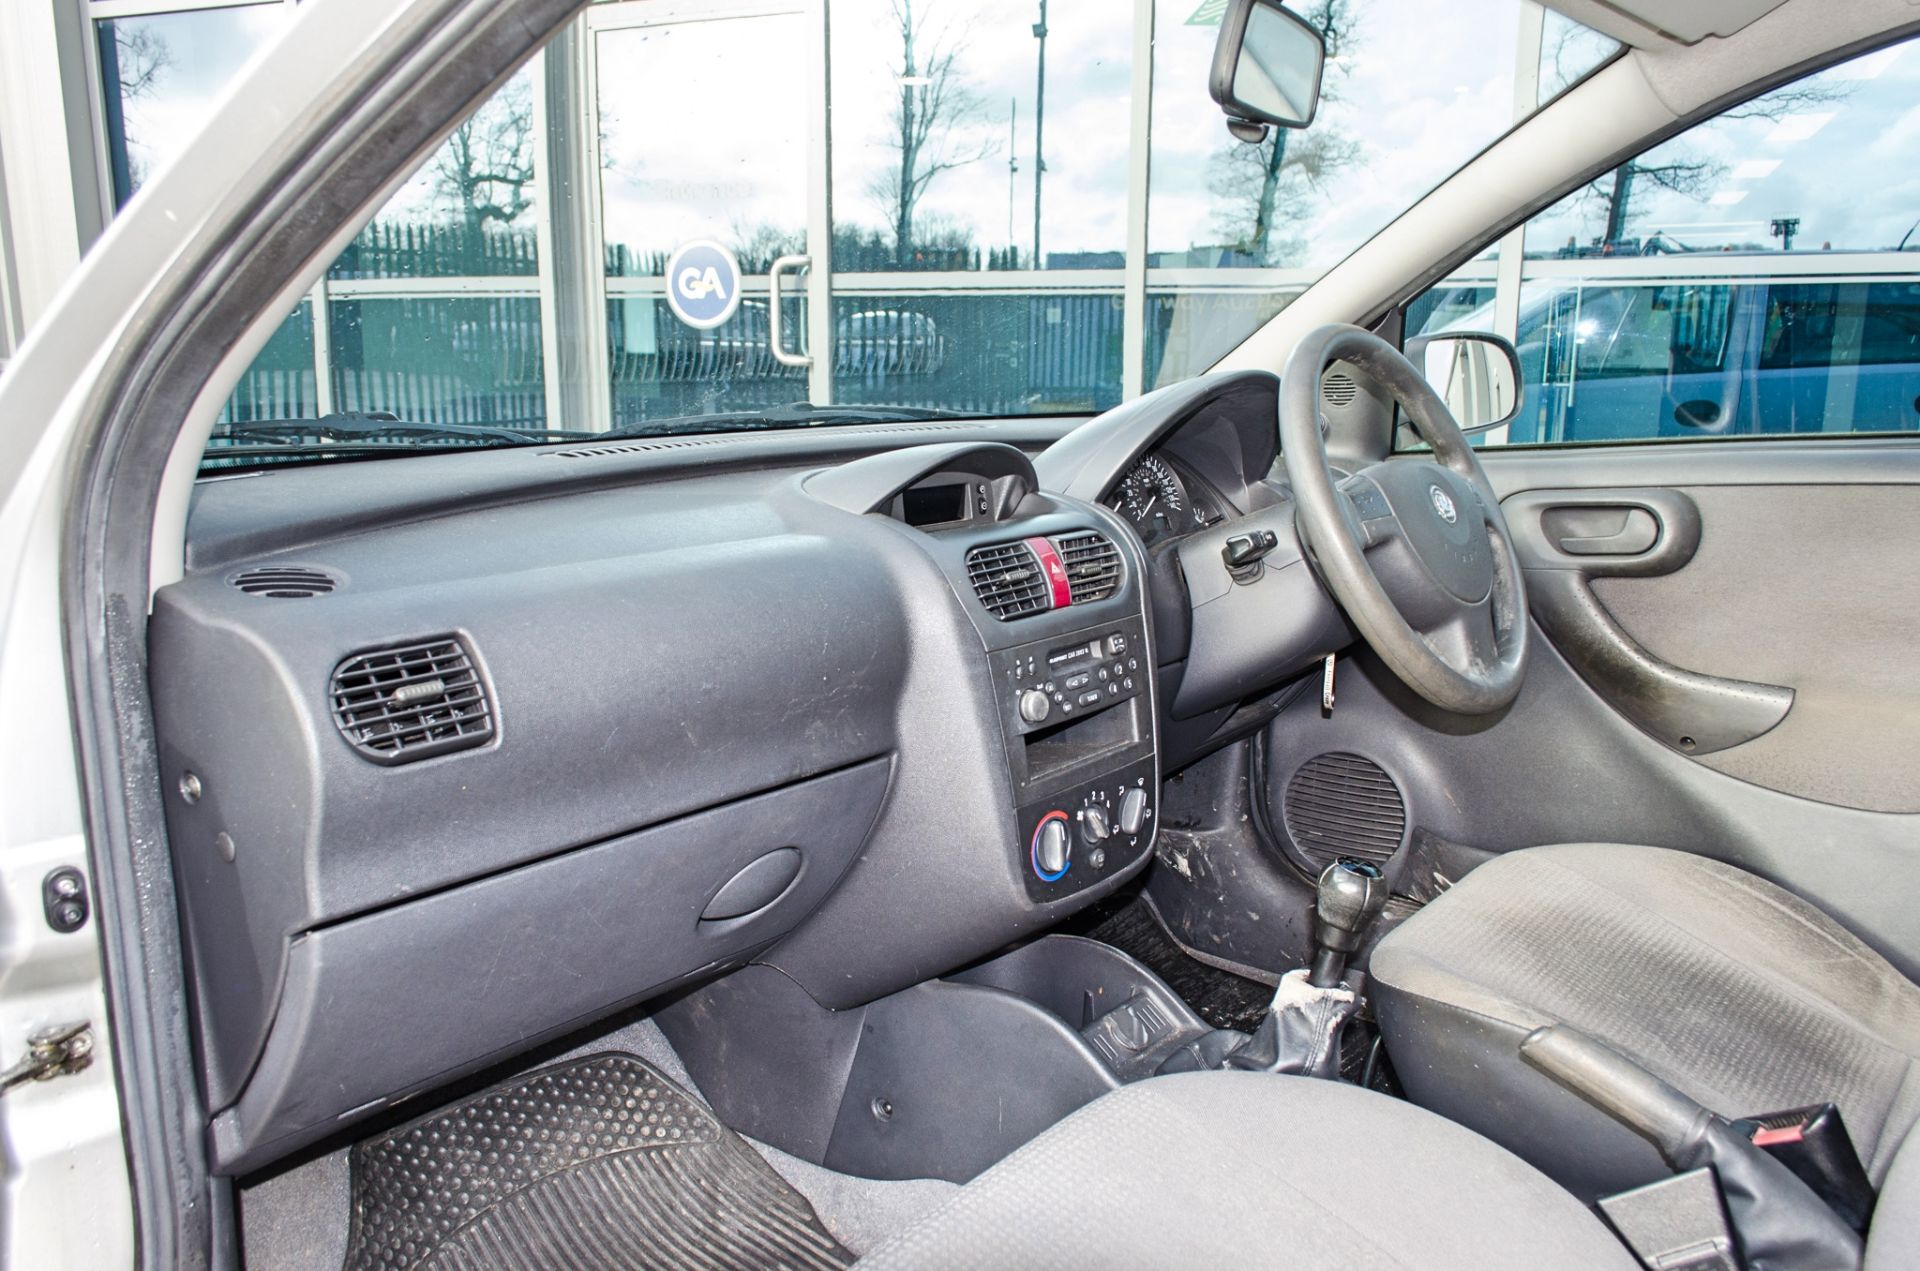 2003 Vauxhall Corsa GLS 16V 1199cc 5 door hatchback - Image 36 of 57